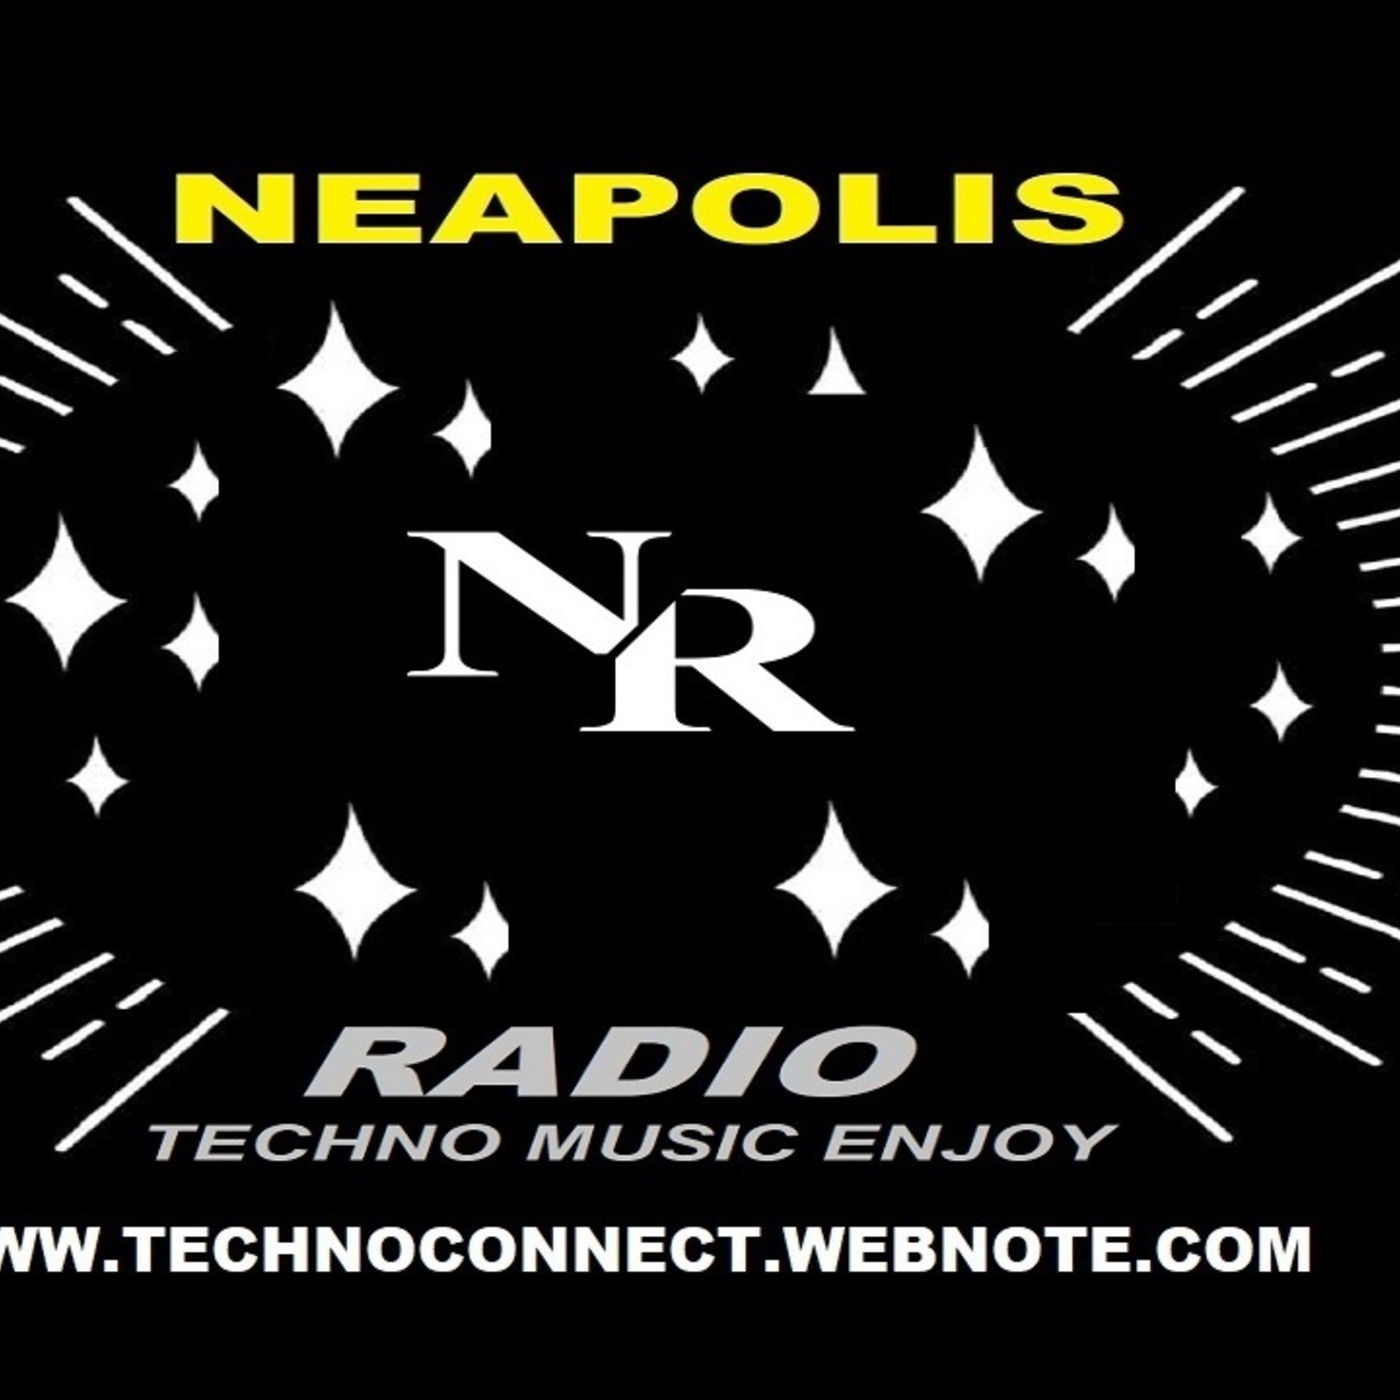 NEAPOLIS RADIO ON AIR 24/7